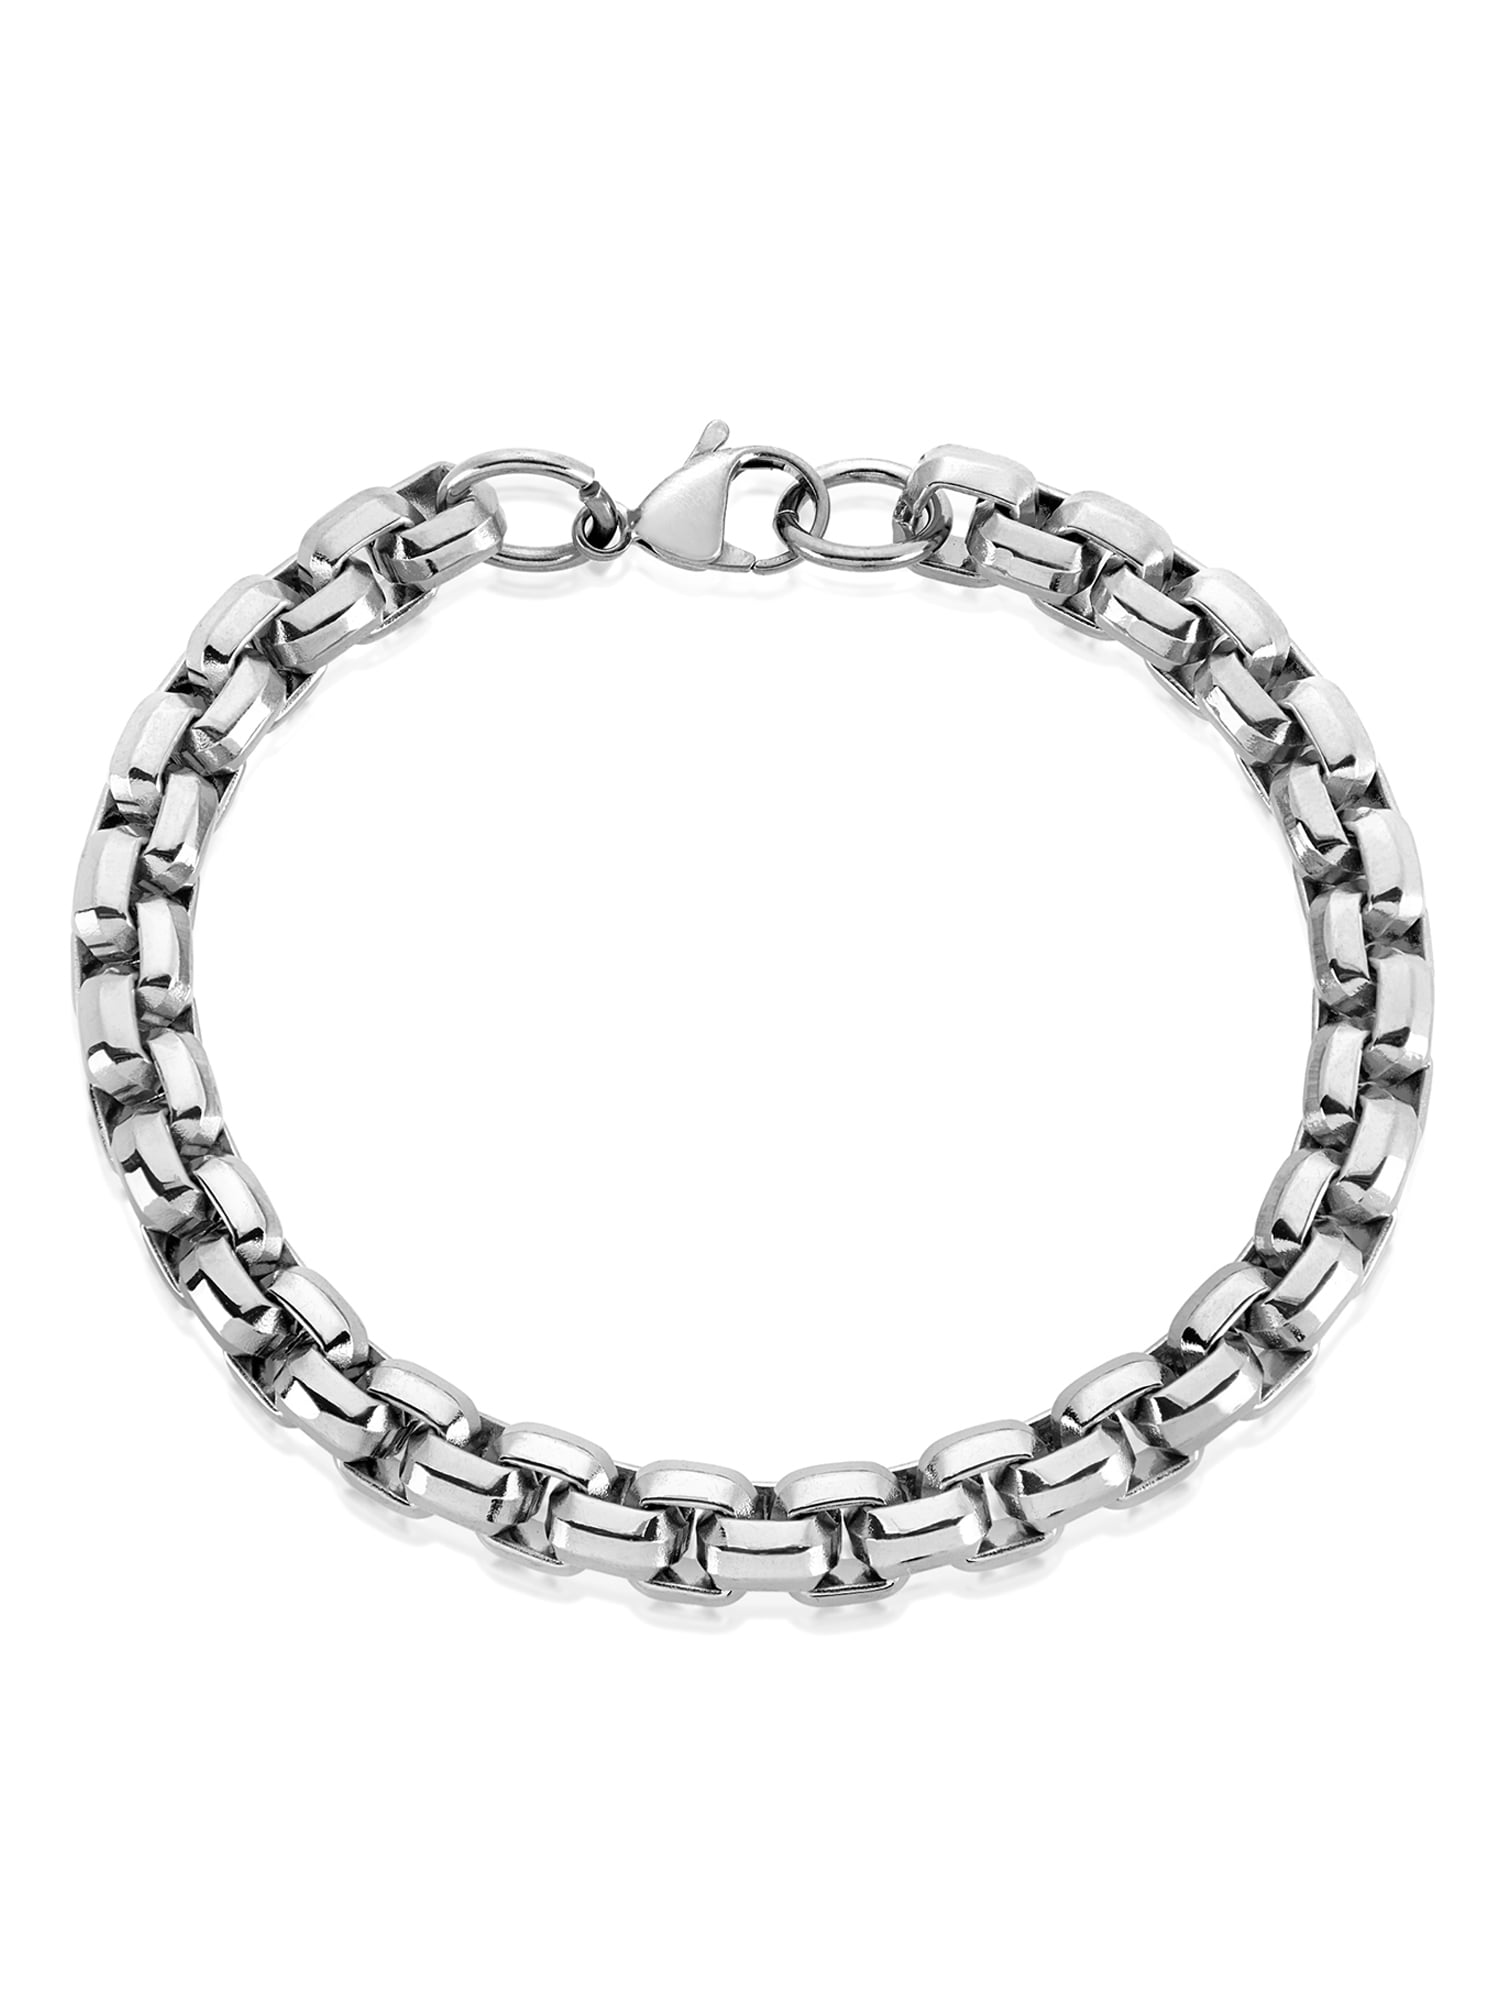 INOX Mens Stainless Steel Motor Chain Bracelet 8.5 inch Long